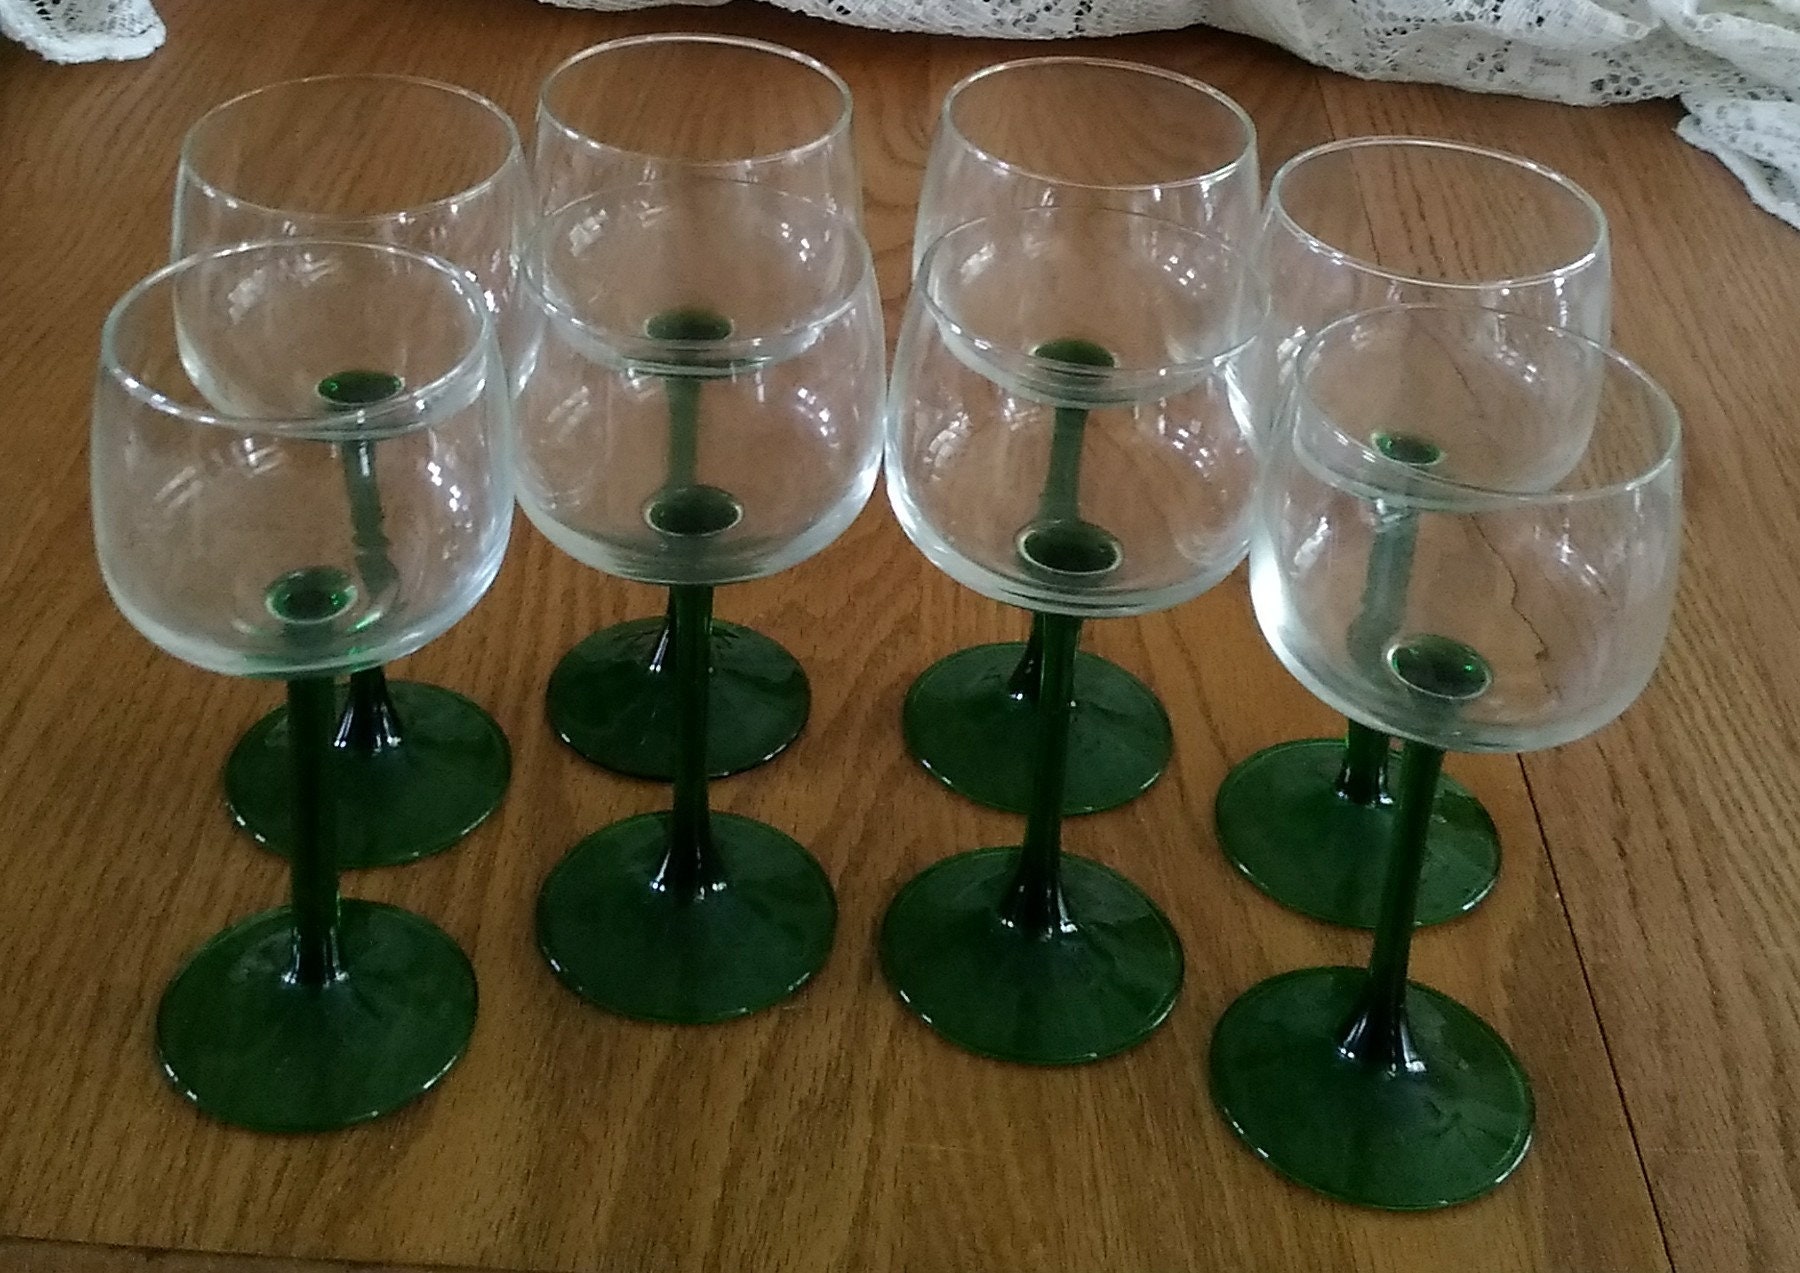 LAV Small Wine Glasses Set of 6 - 8 oz Clear White Wine Glasses Short Stem  